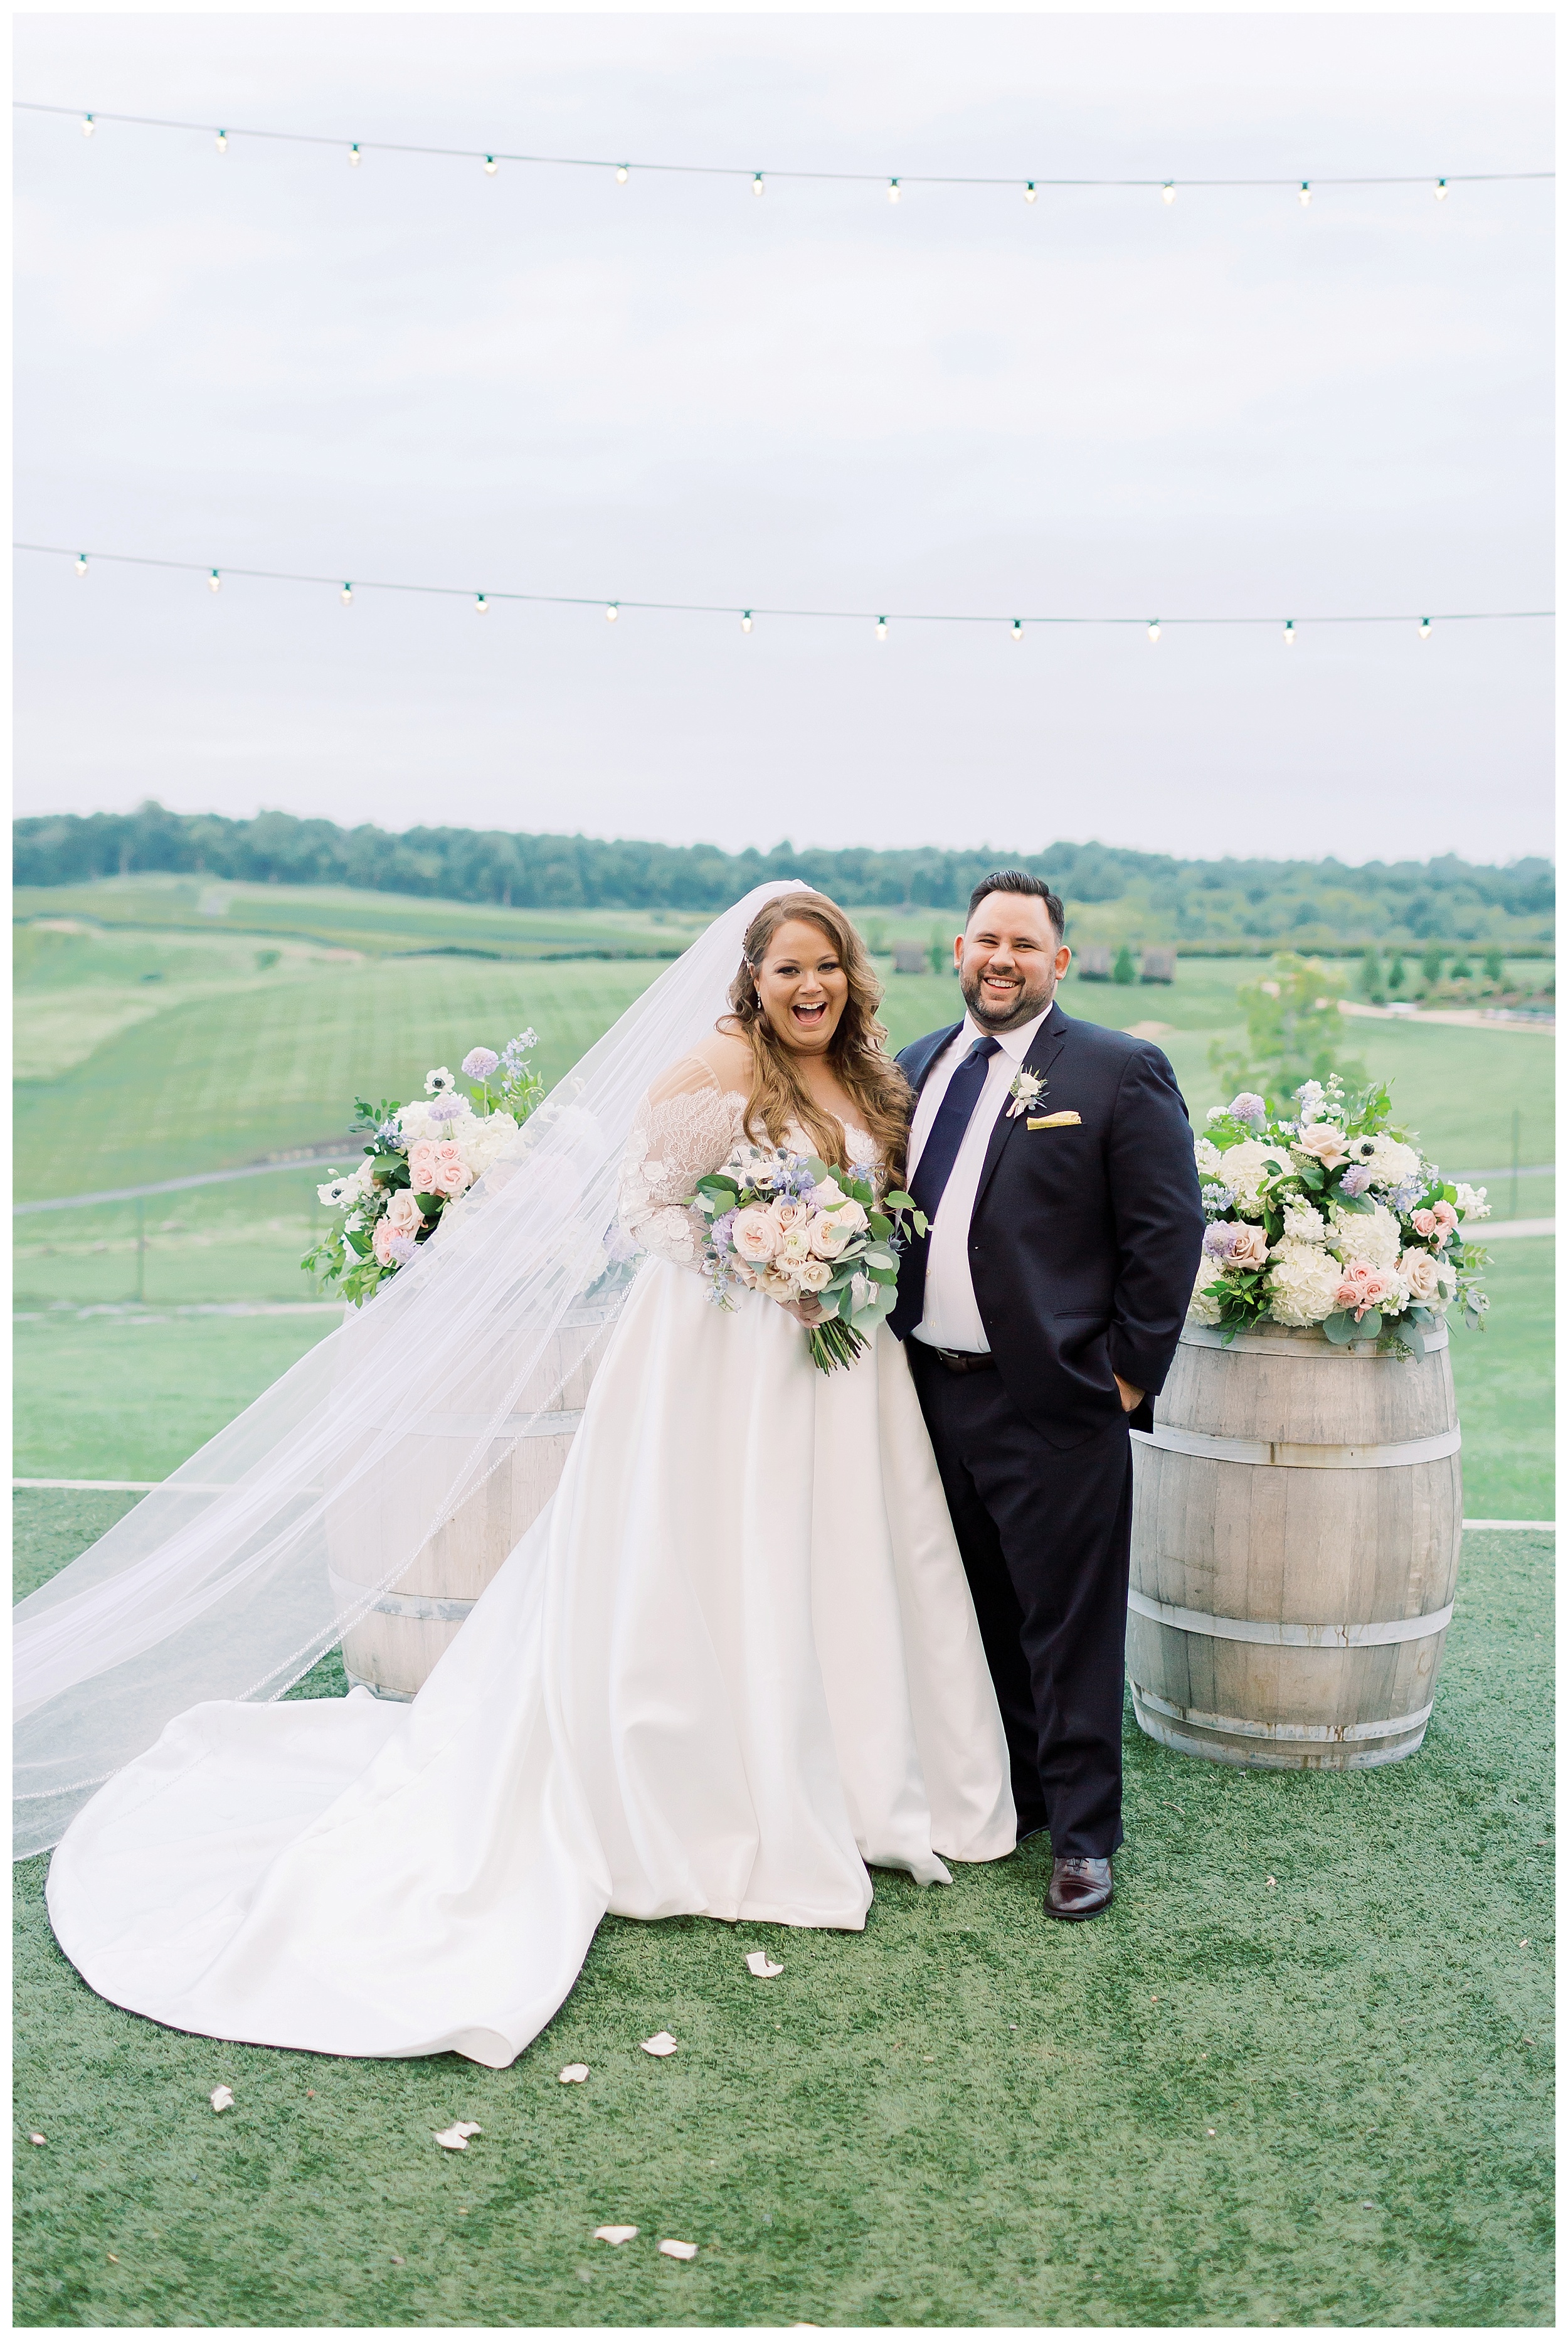 Stone Tower Winery Wedding | Northern Virginia Elopement Photos Kir Tuben Photography